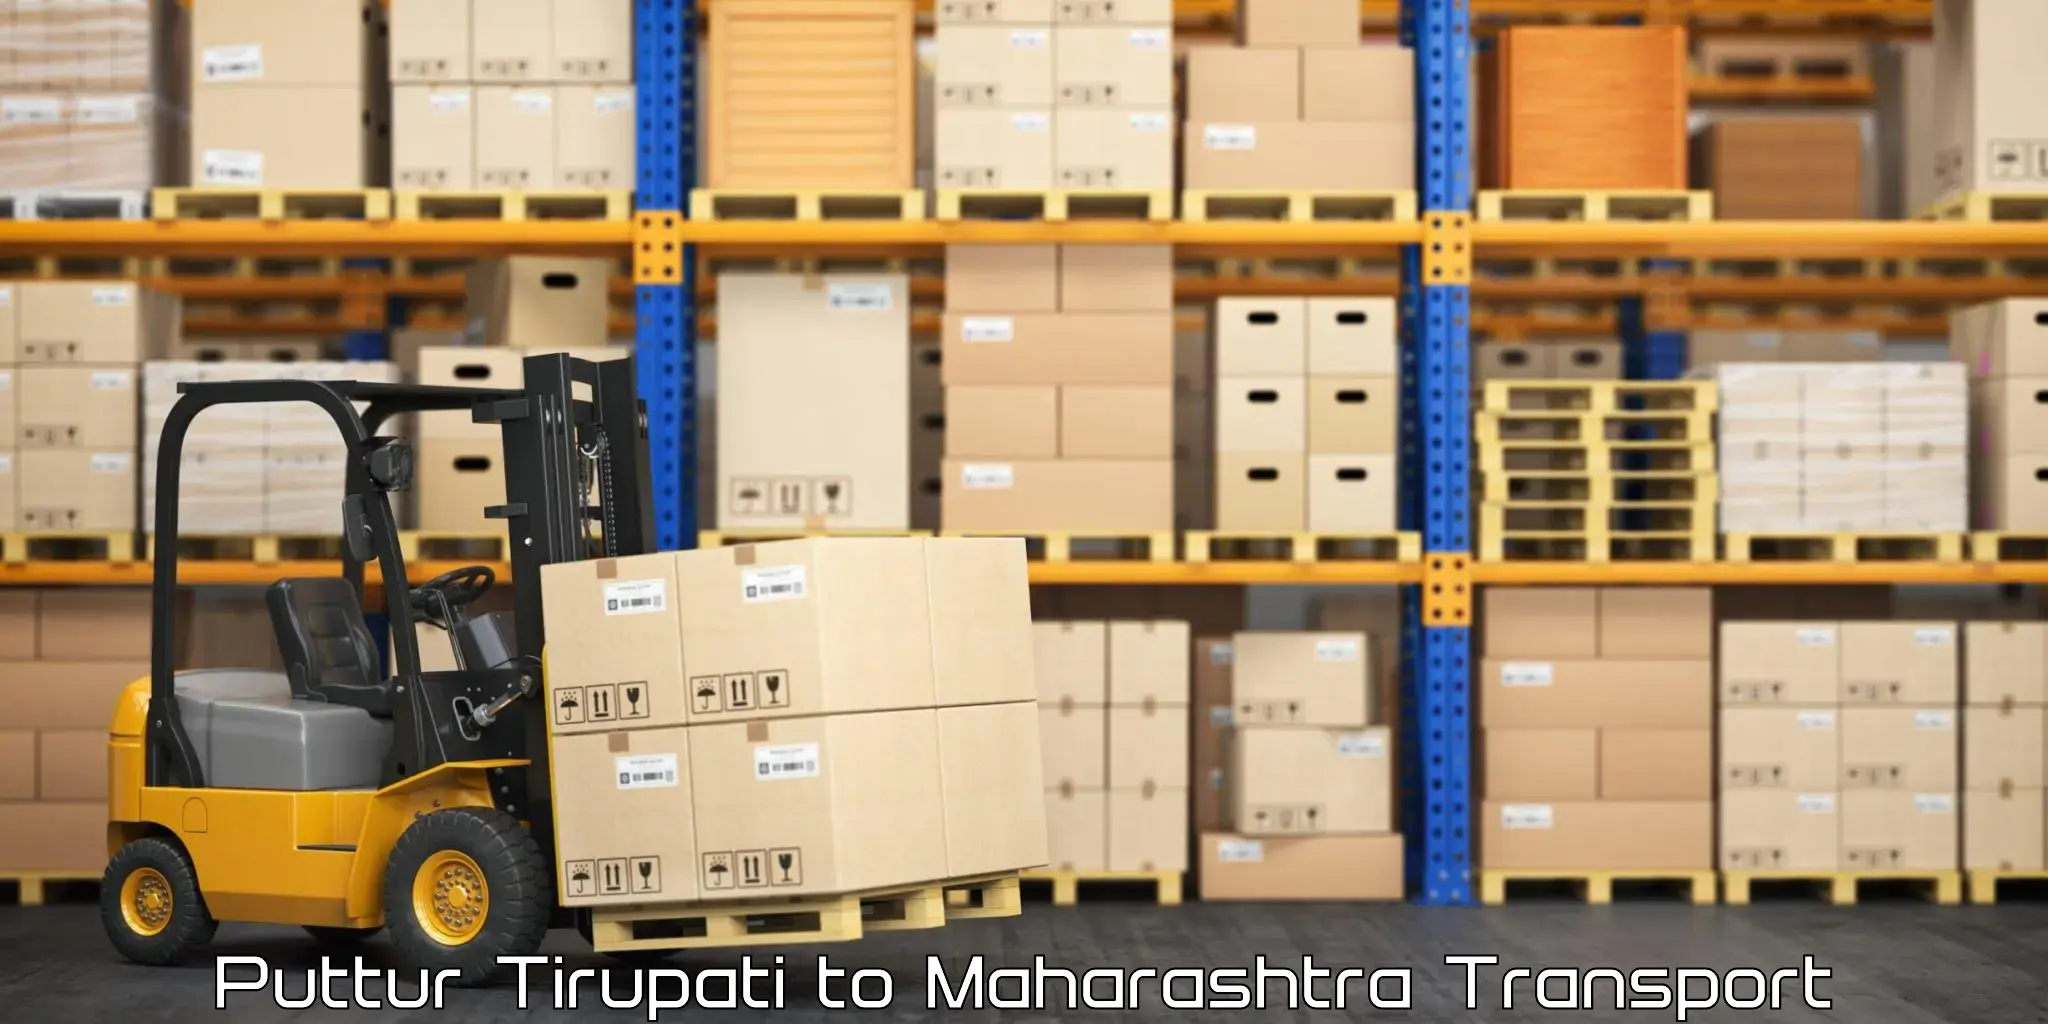 Furniture transport service Puttur Tirupati to Wardha